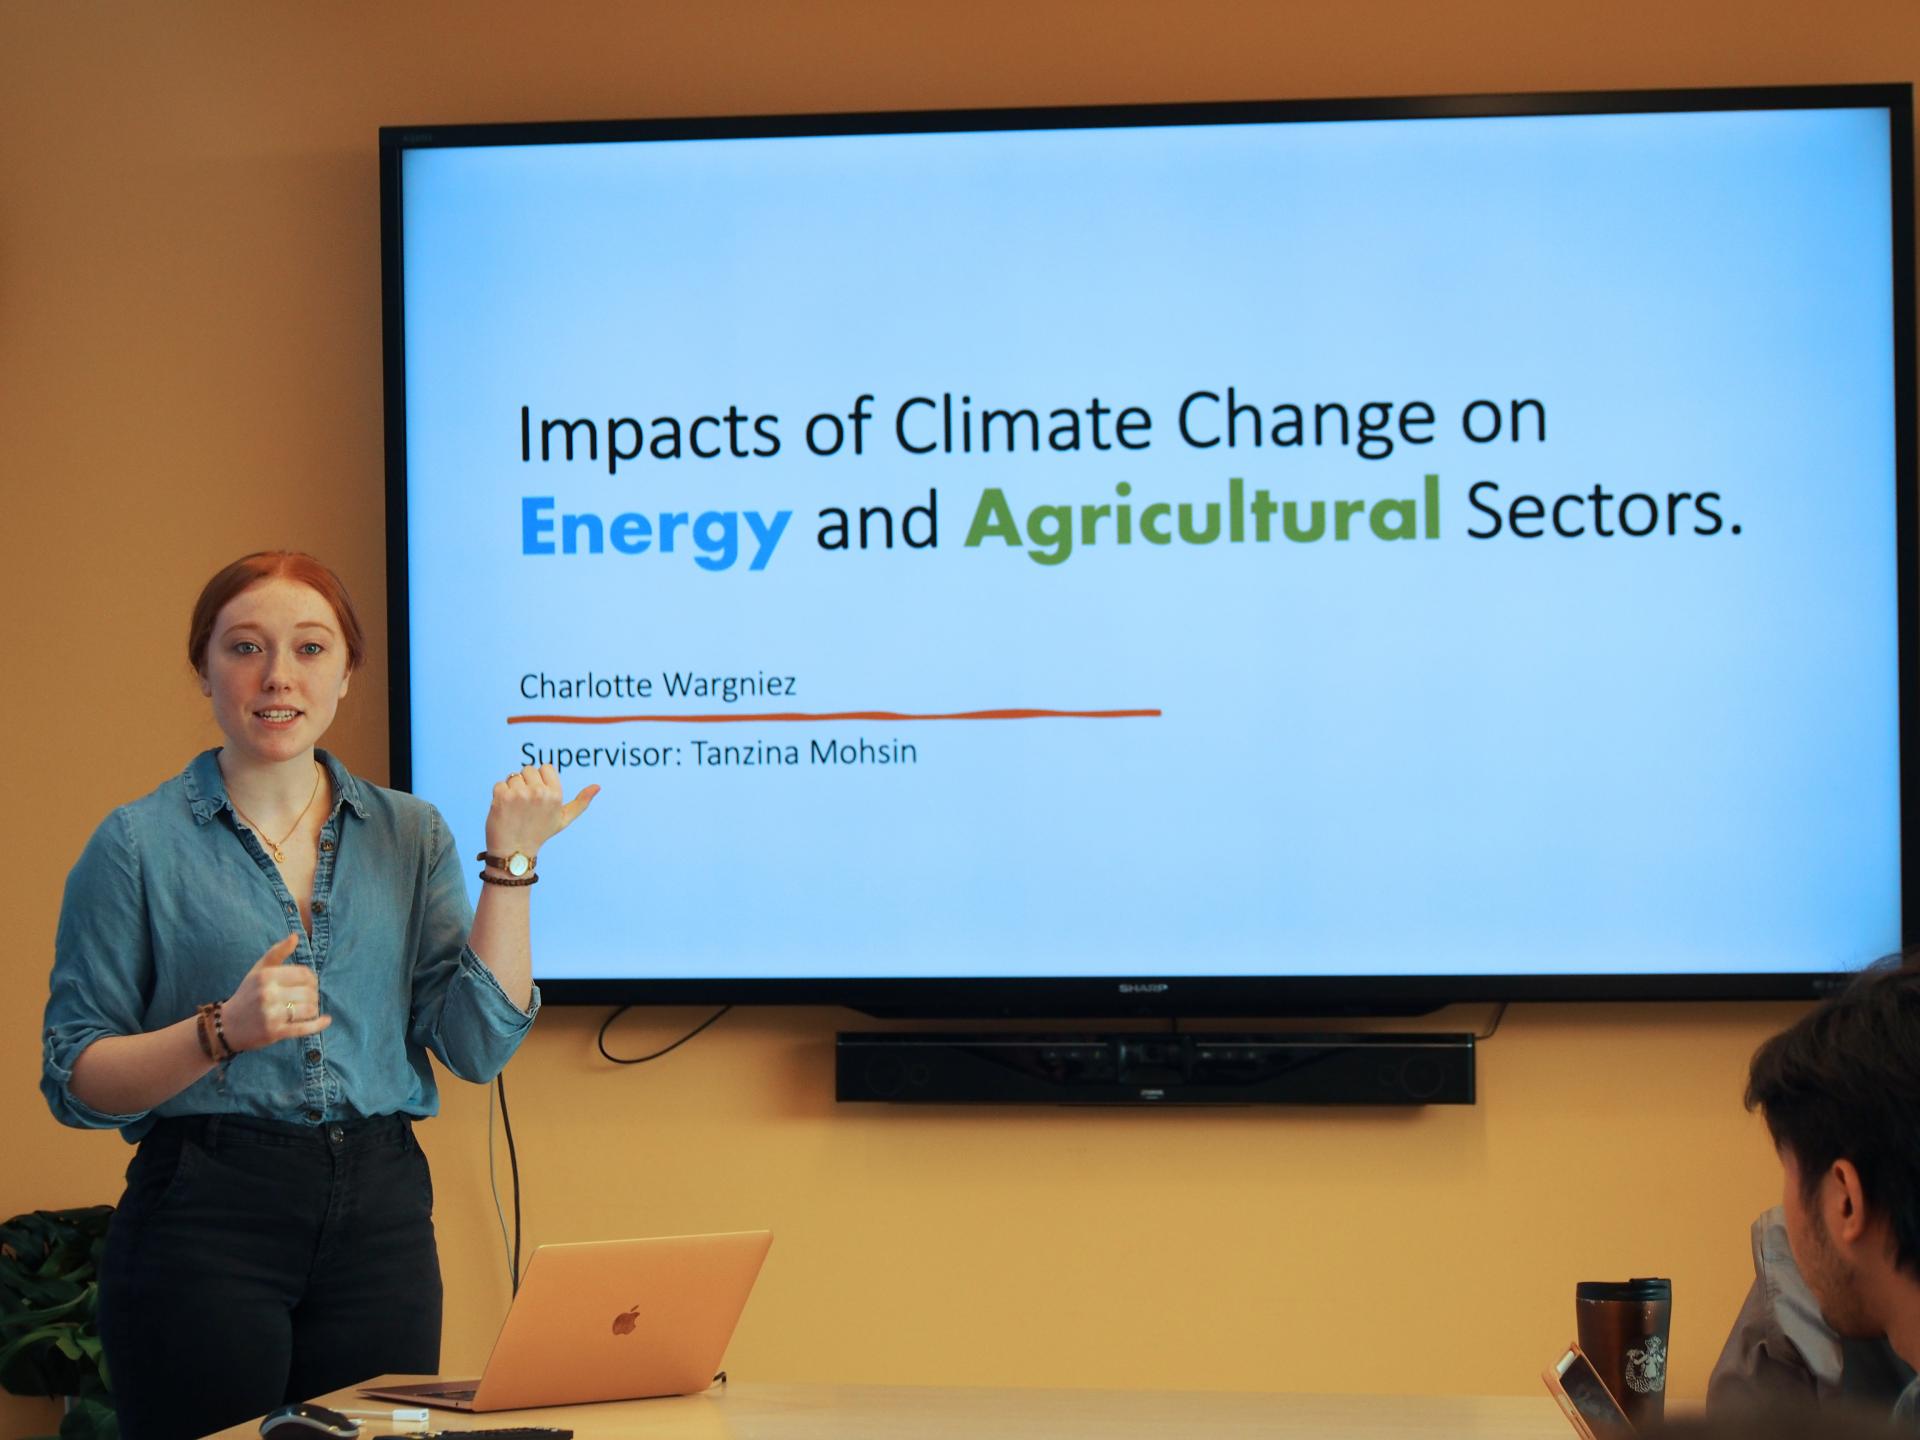 Charlotte Wargniez conducting a presentation.